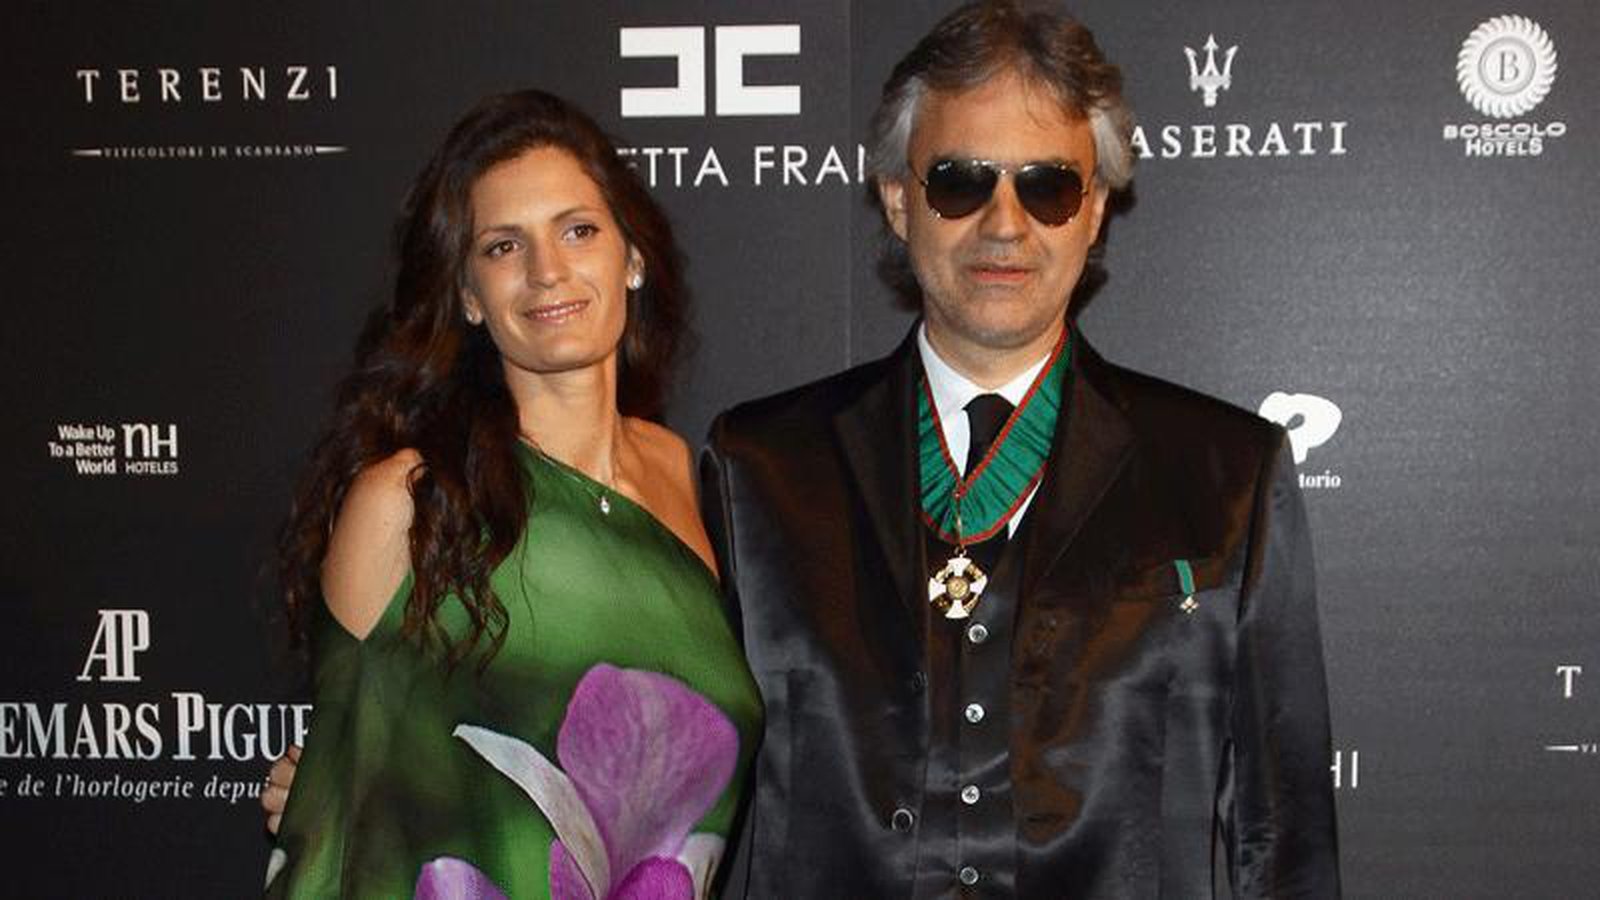 Enrica Cenzatti biography: who is Andrea Bocelli's first wife? 